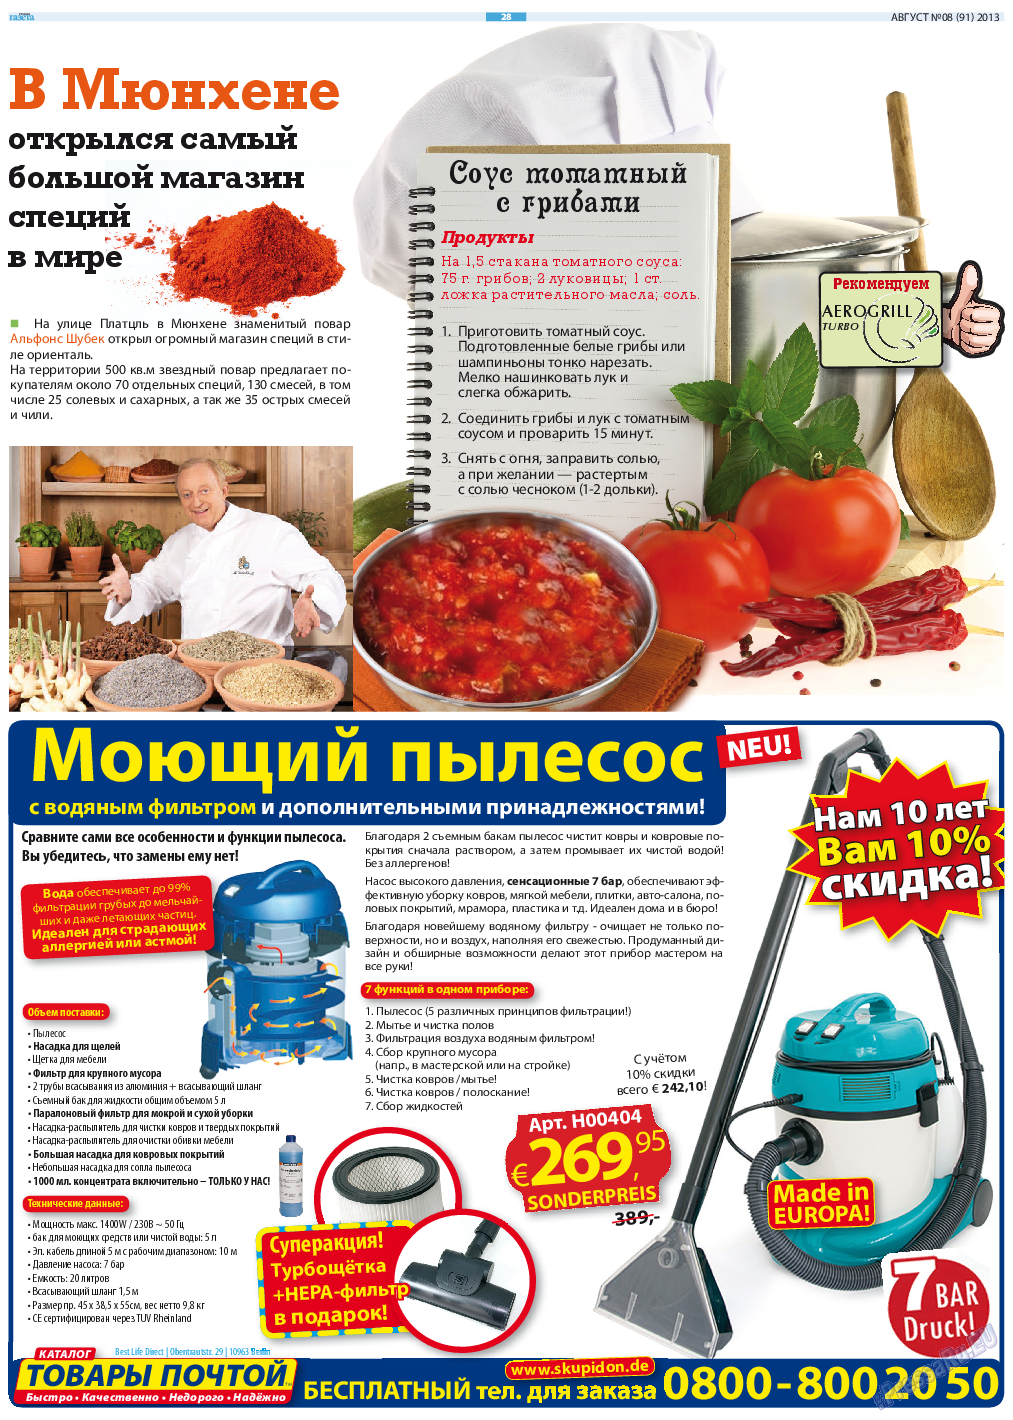 Русская Газета, газета. 2013 №8 стр.28